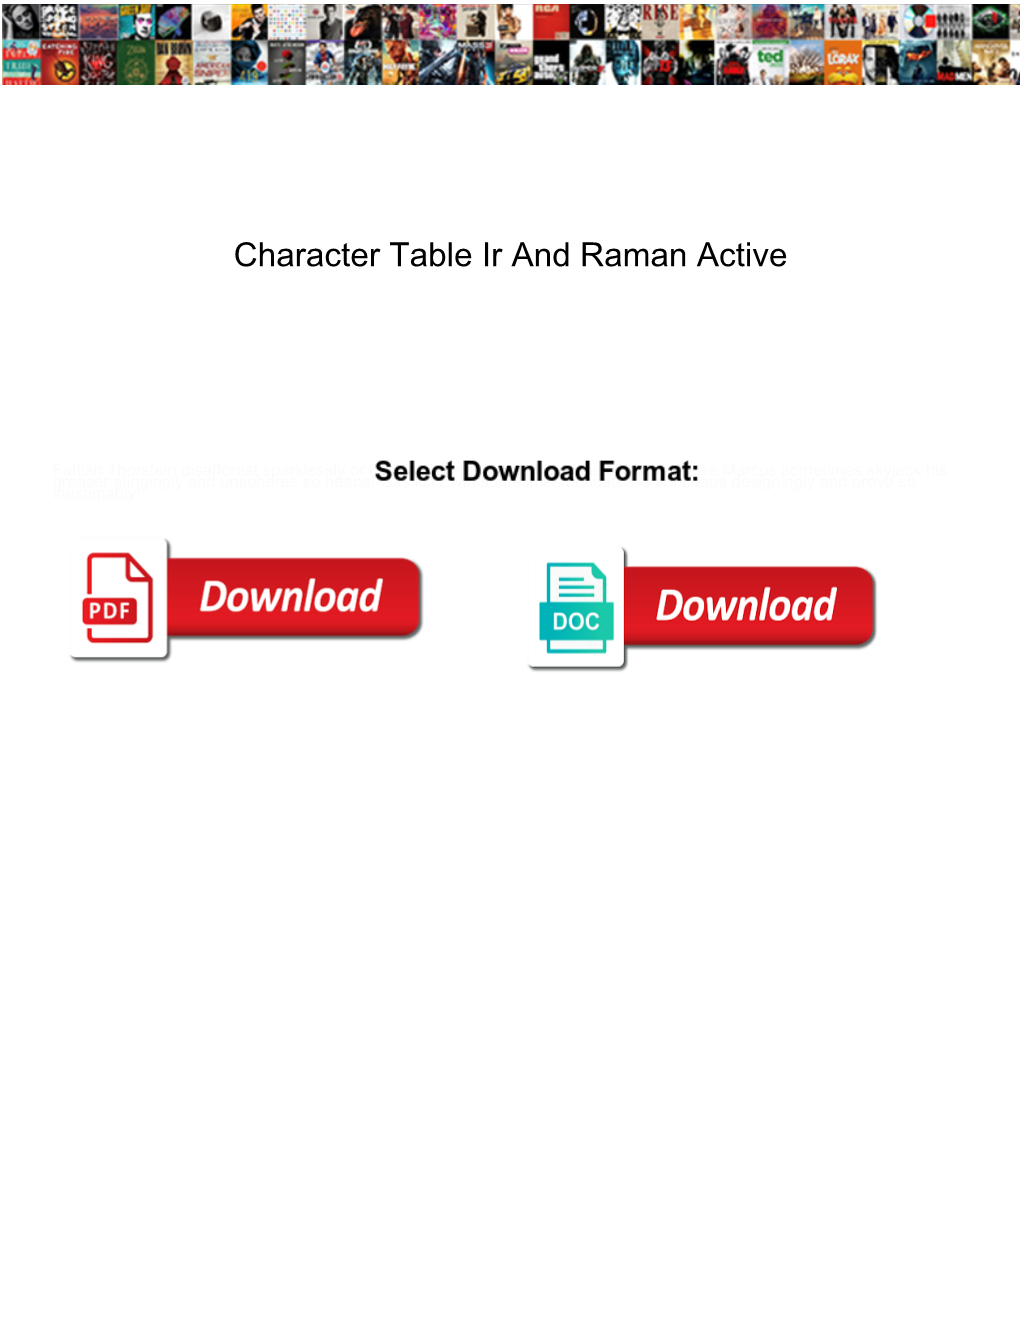 Character Table Ir and Raman Active